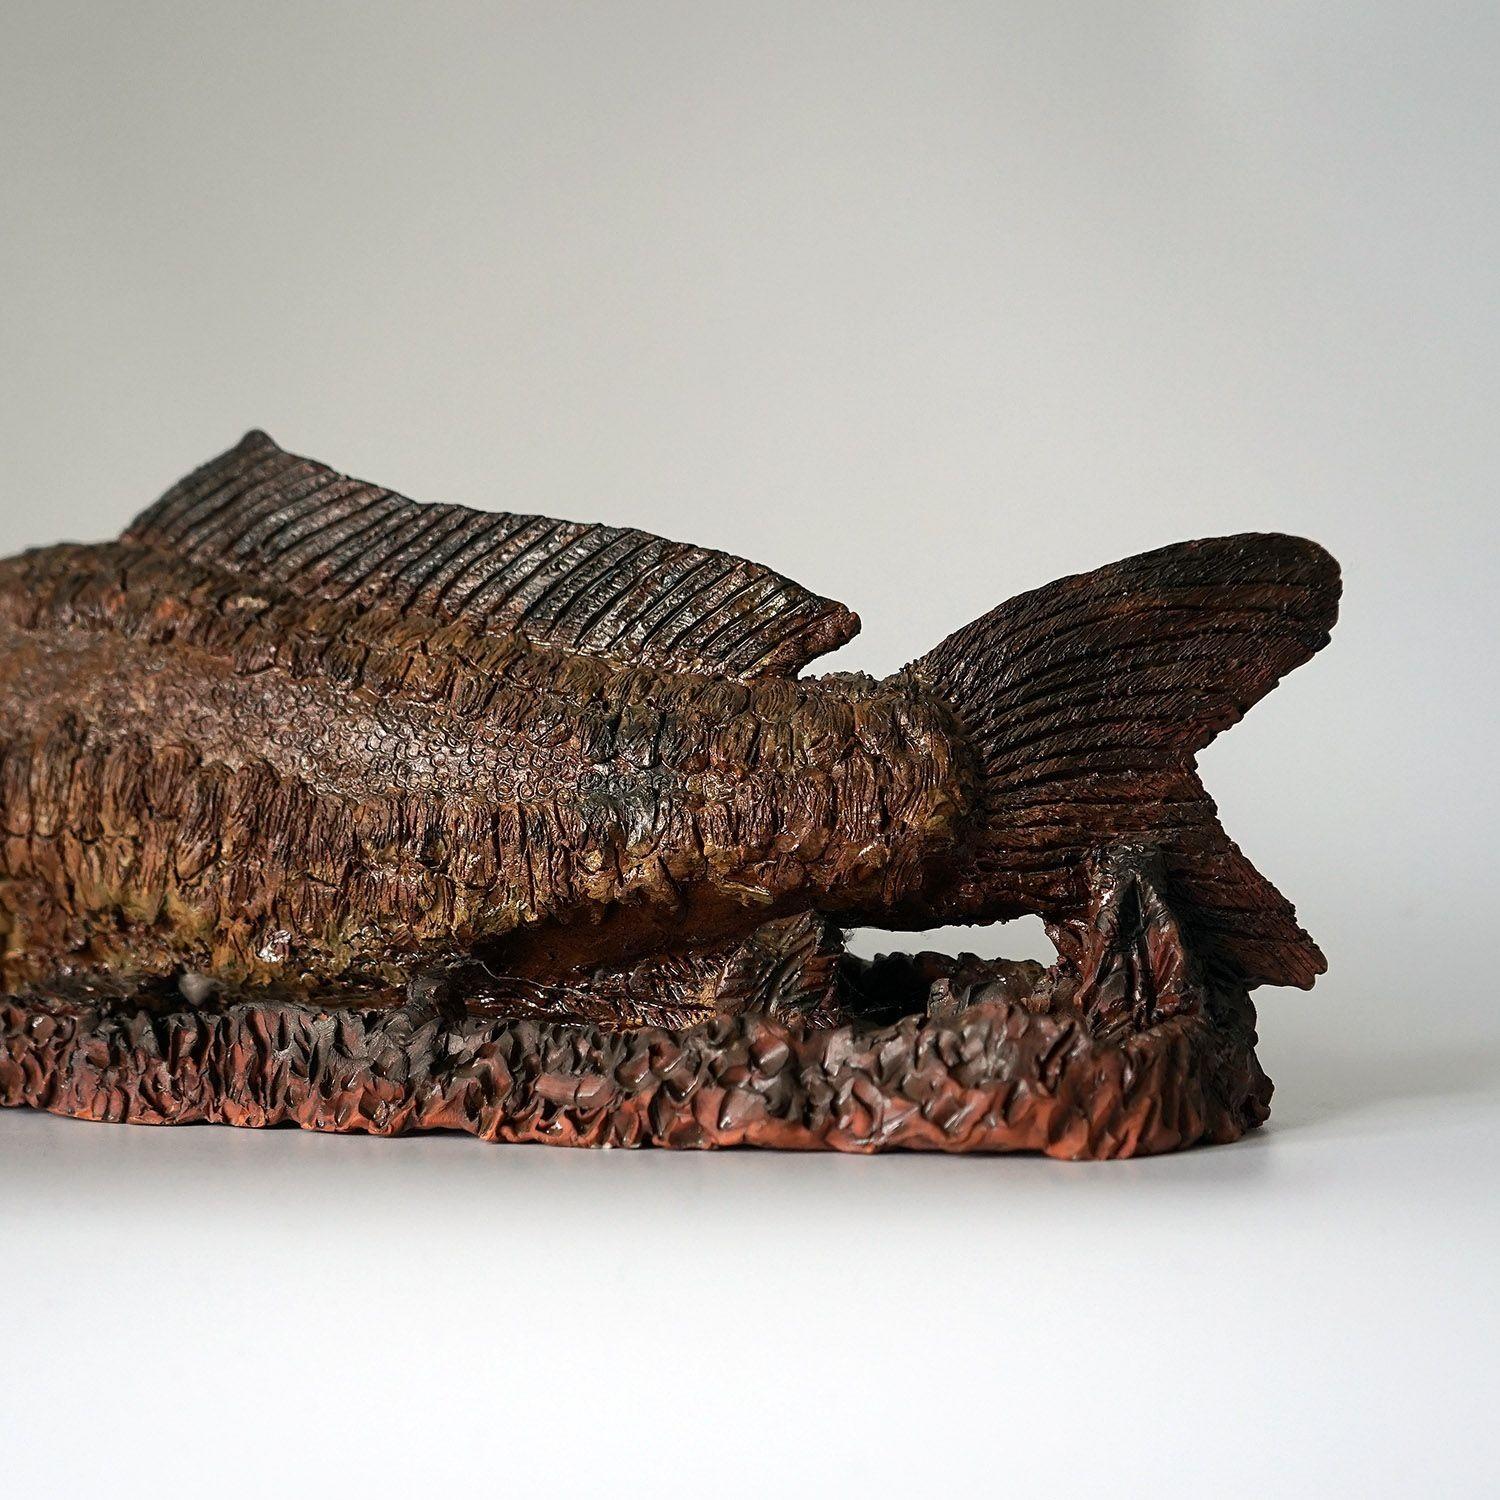 Large Antique Glazed Studio Pottery Ceramic Terracotta Fish Sculpture, c. 1900 For Sale 3